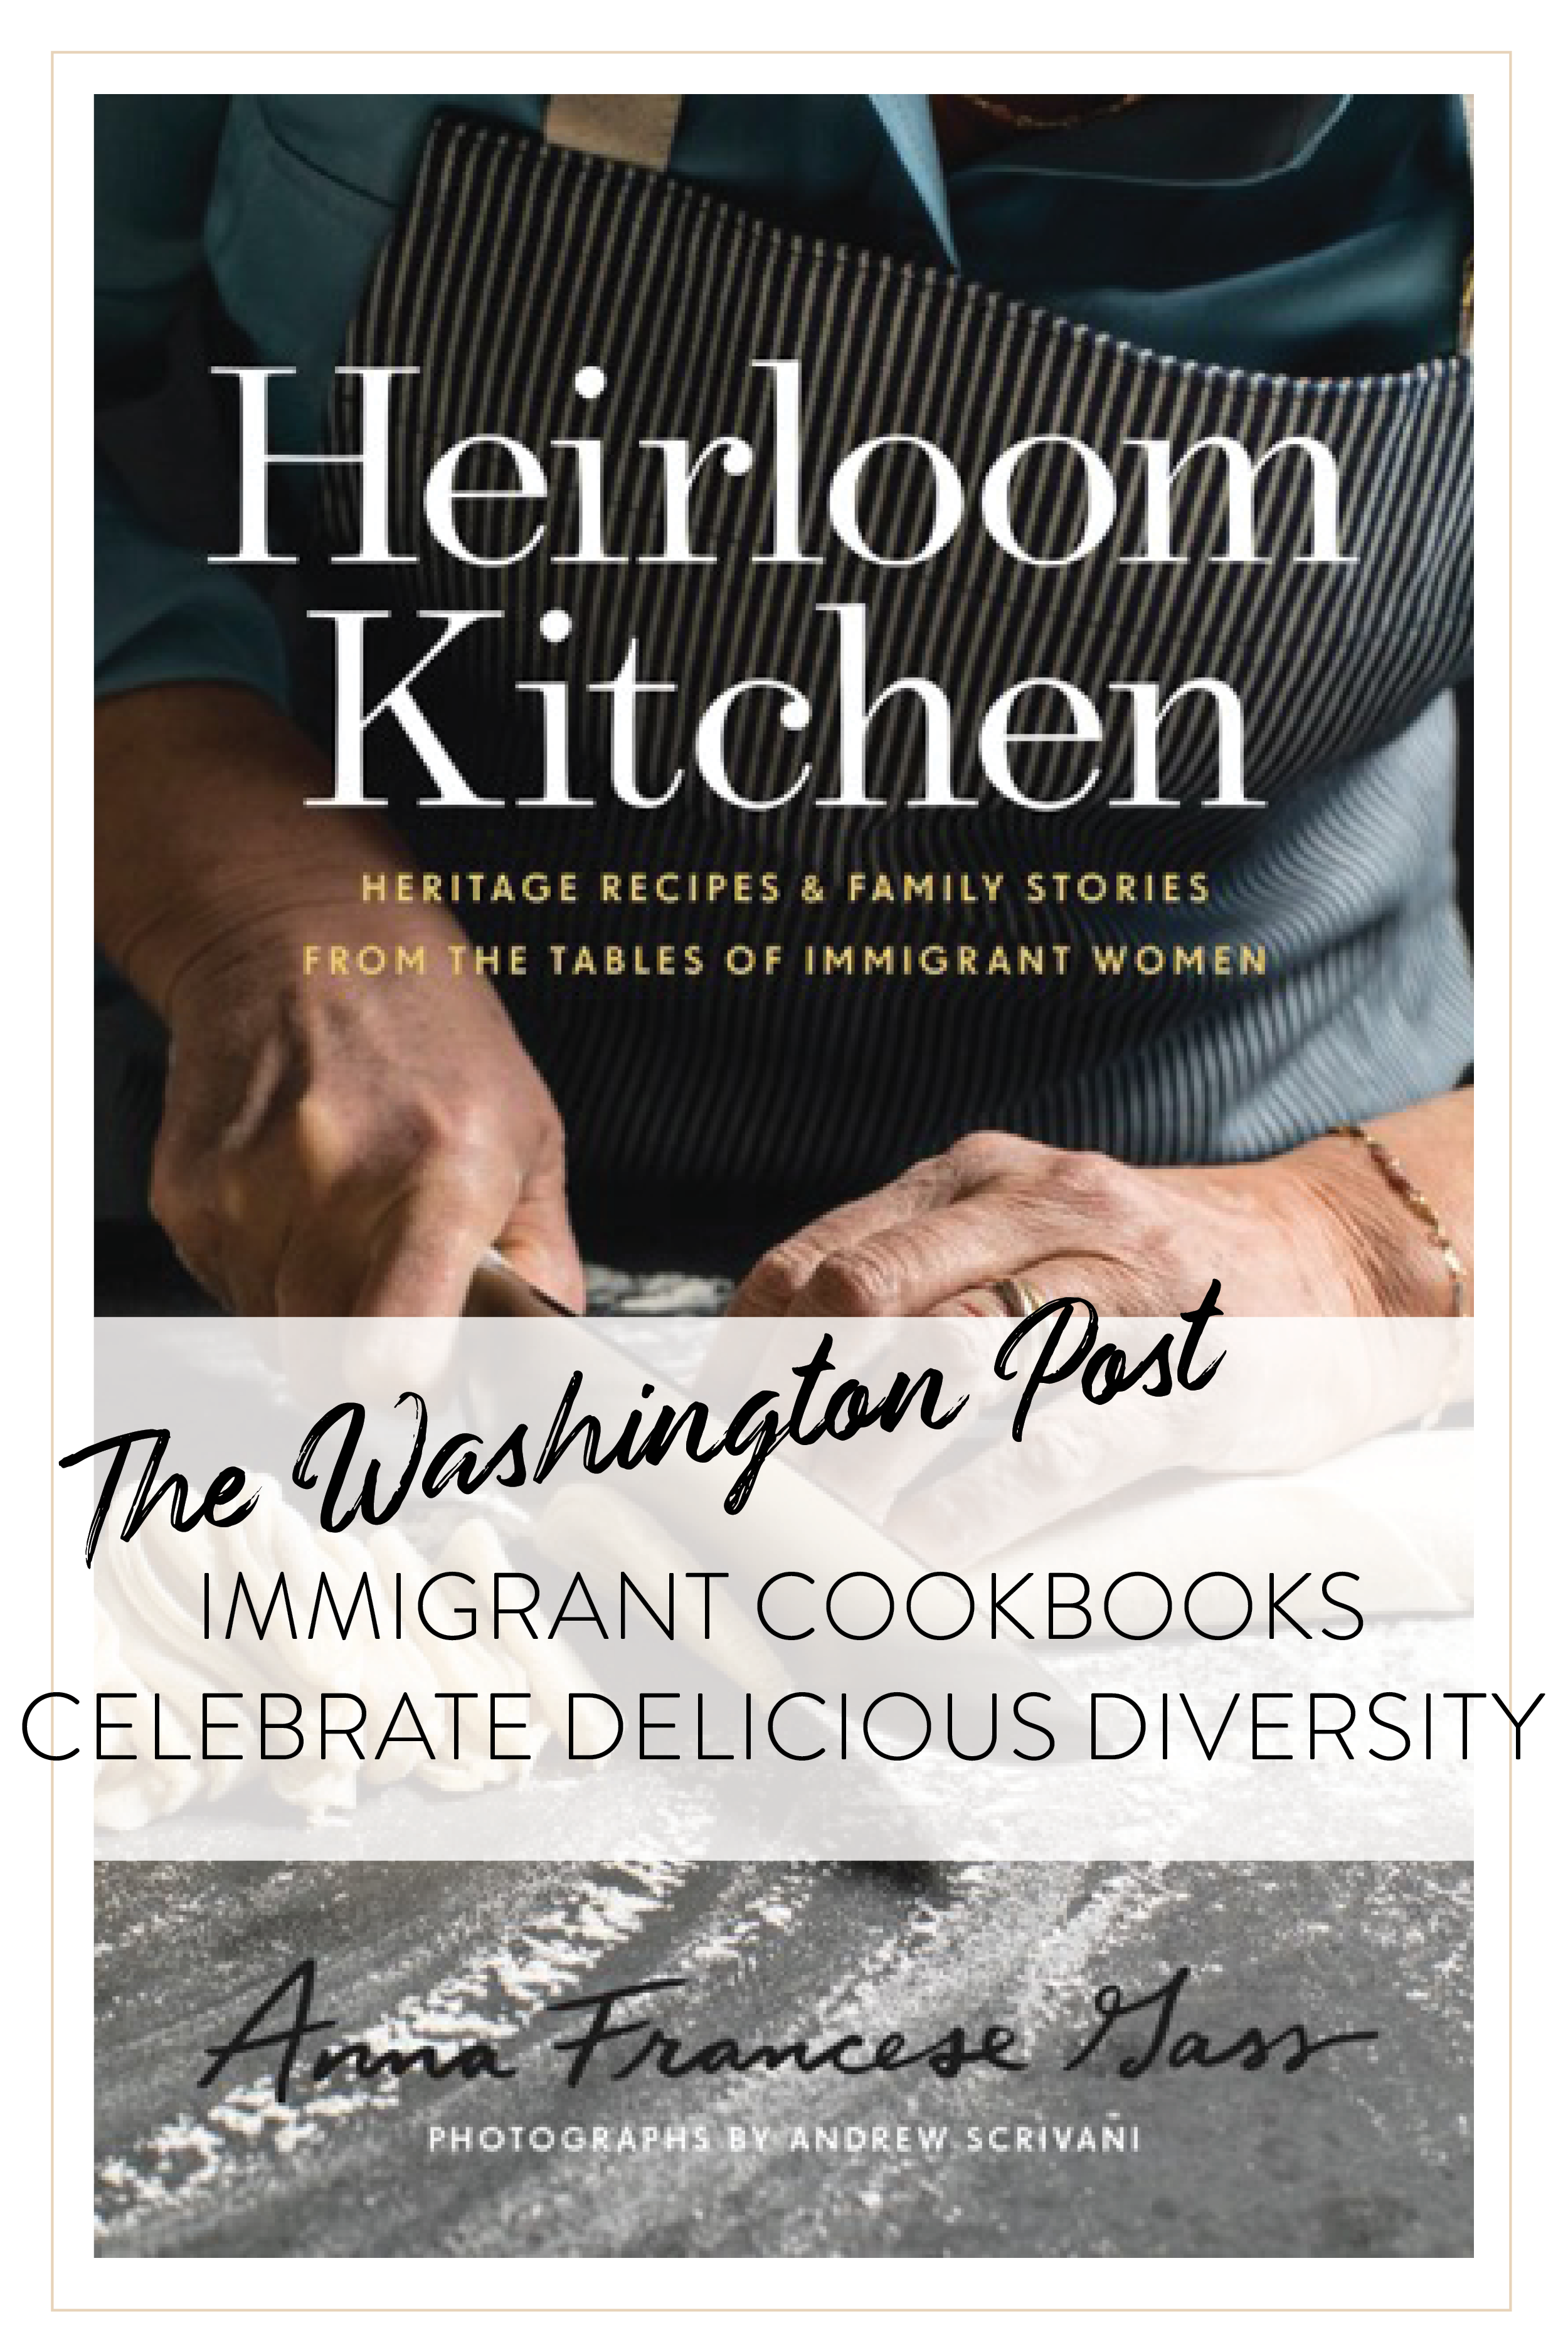 The Washington Post Immigrant Cookbooks Celebrate Delicious Diversity